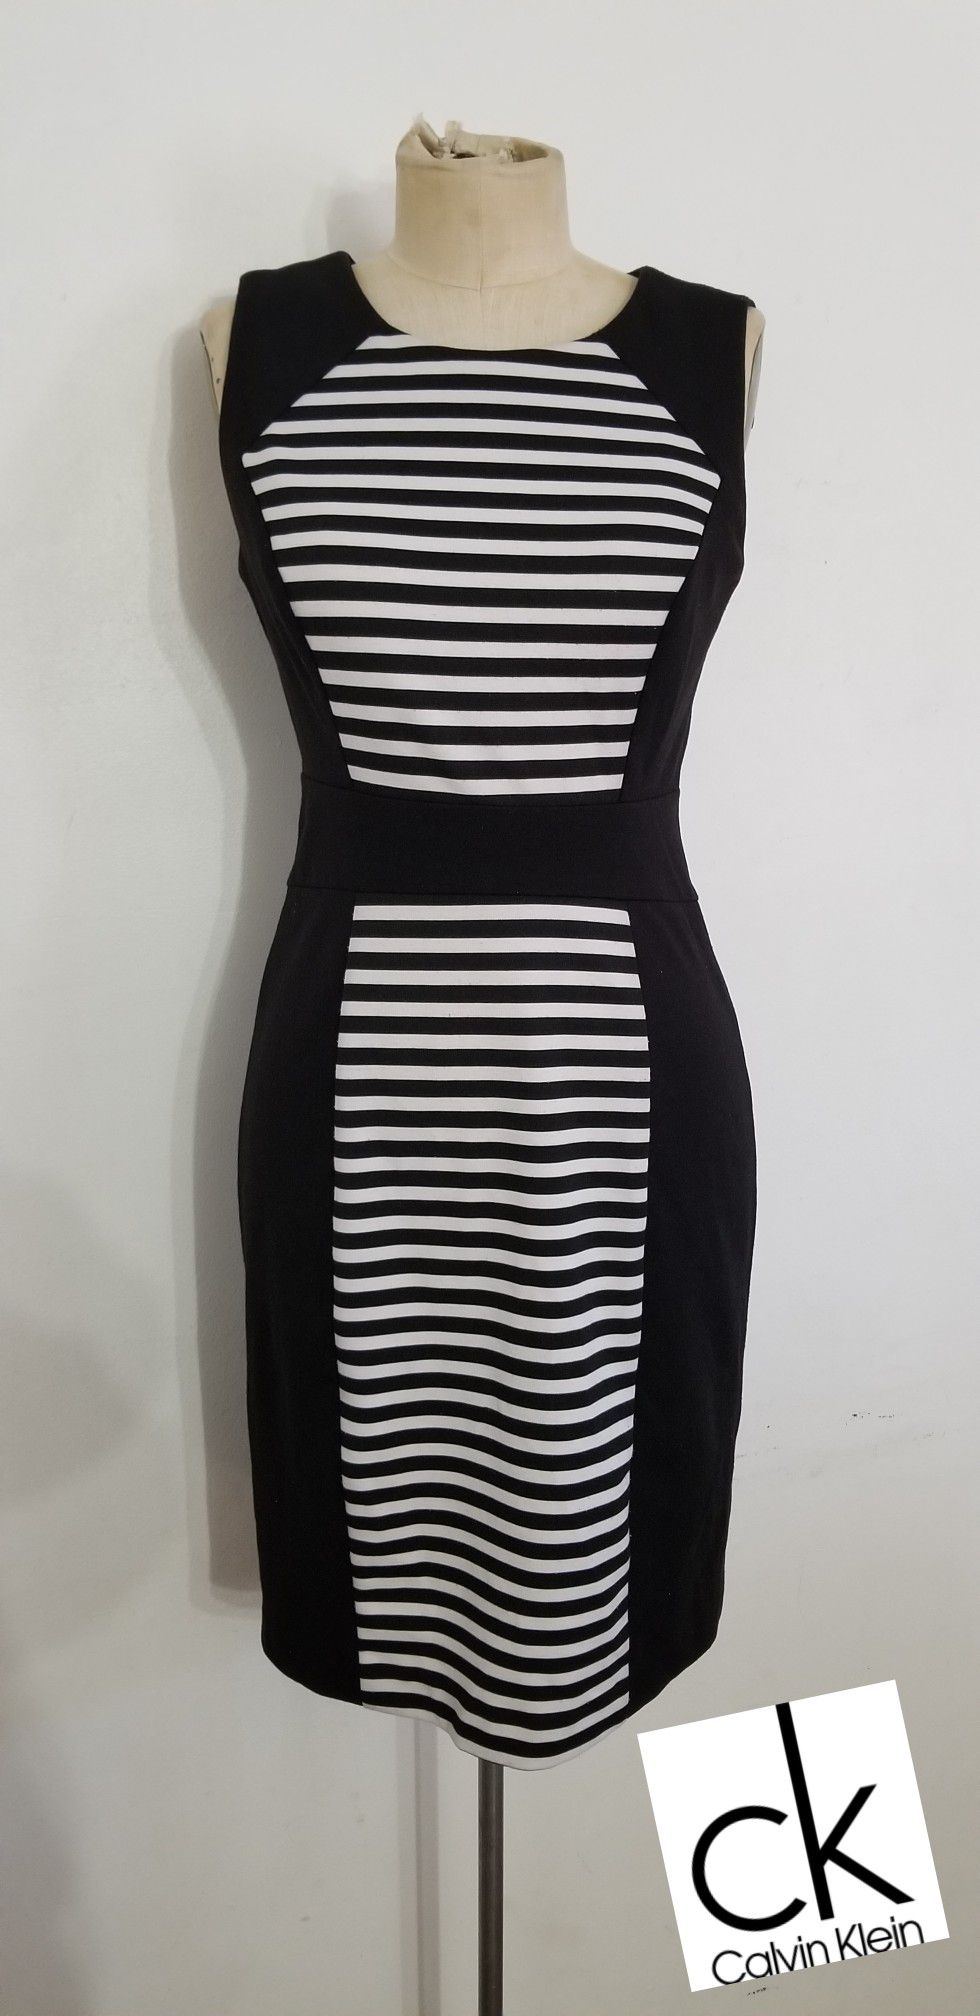 Black and white striped Calvin Klein dress size 2